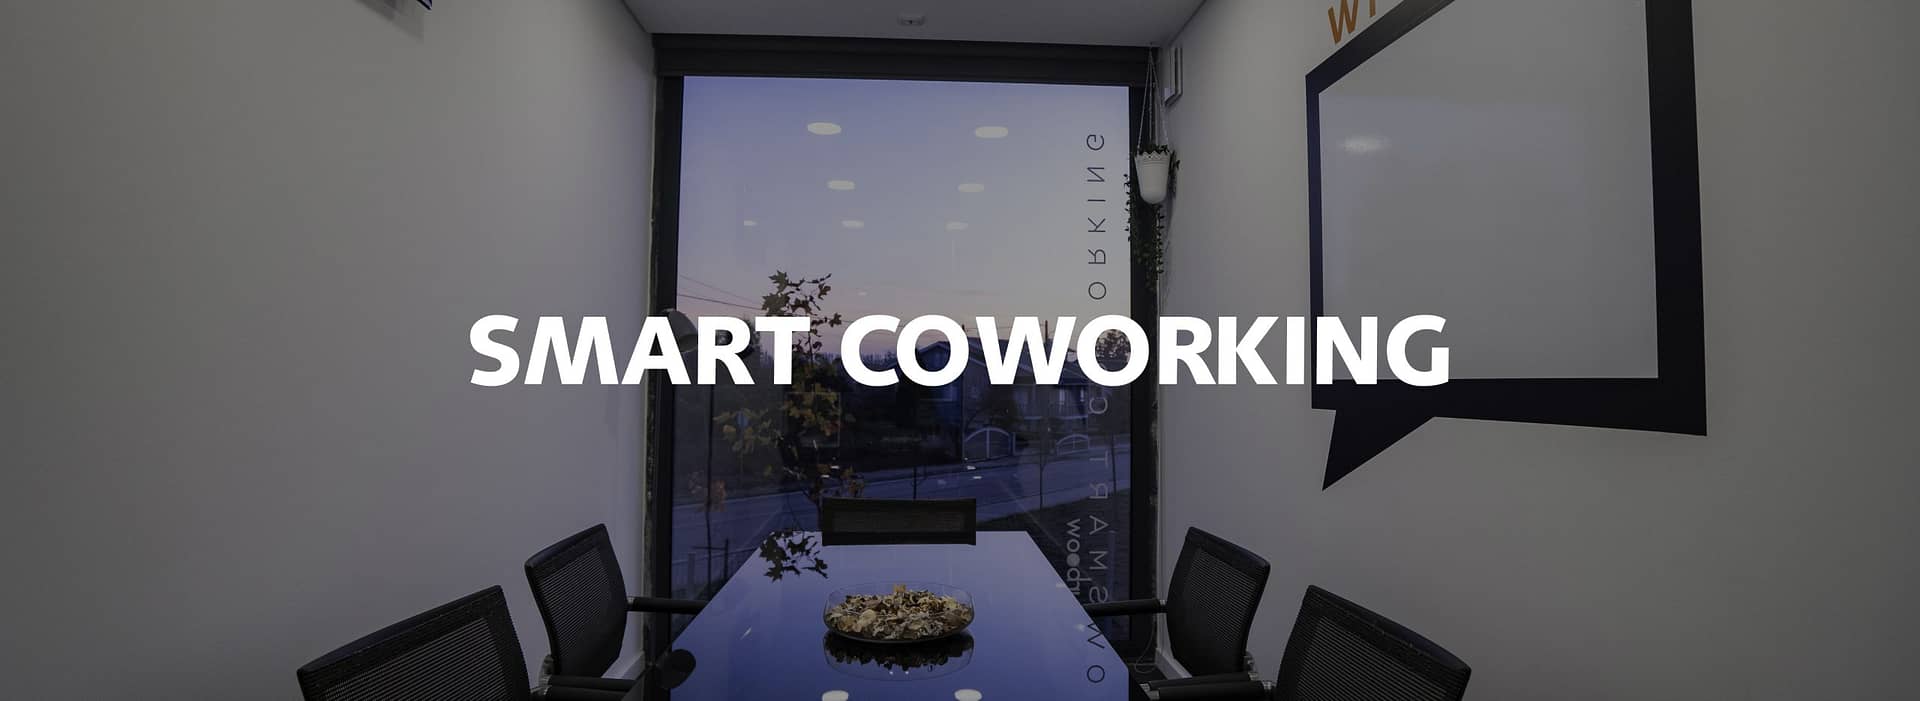 Smart Coworking-min